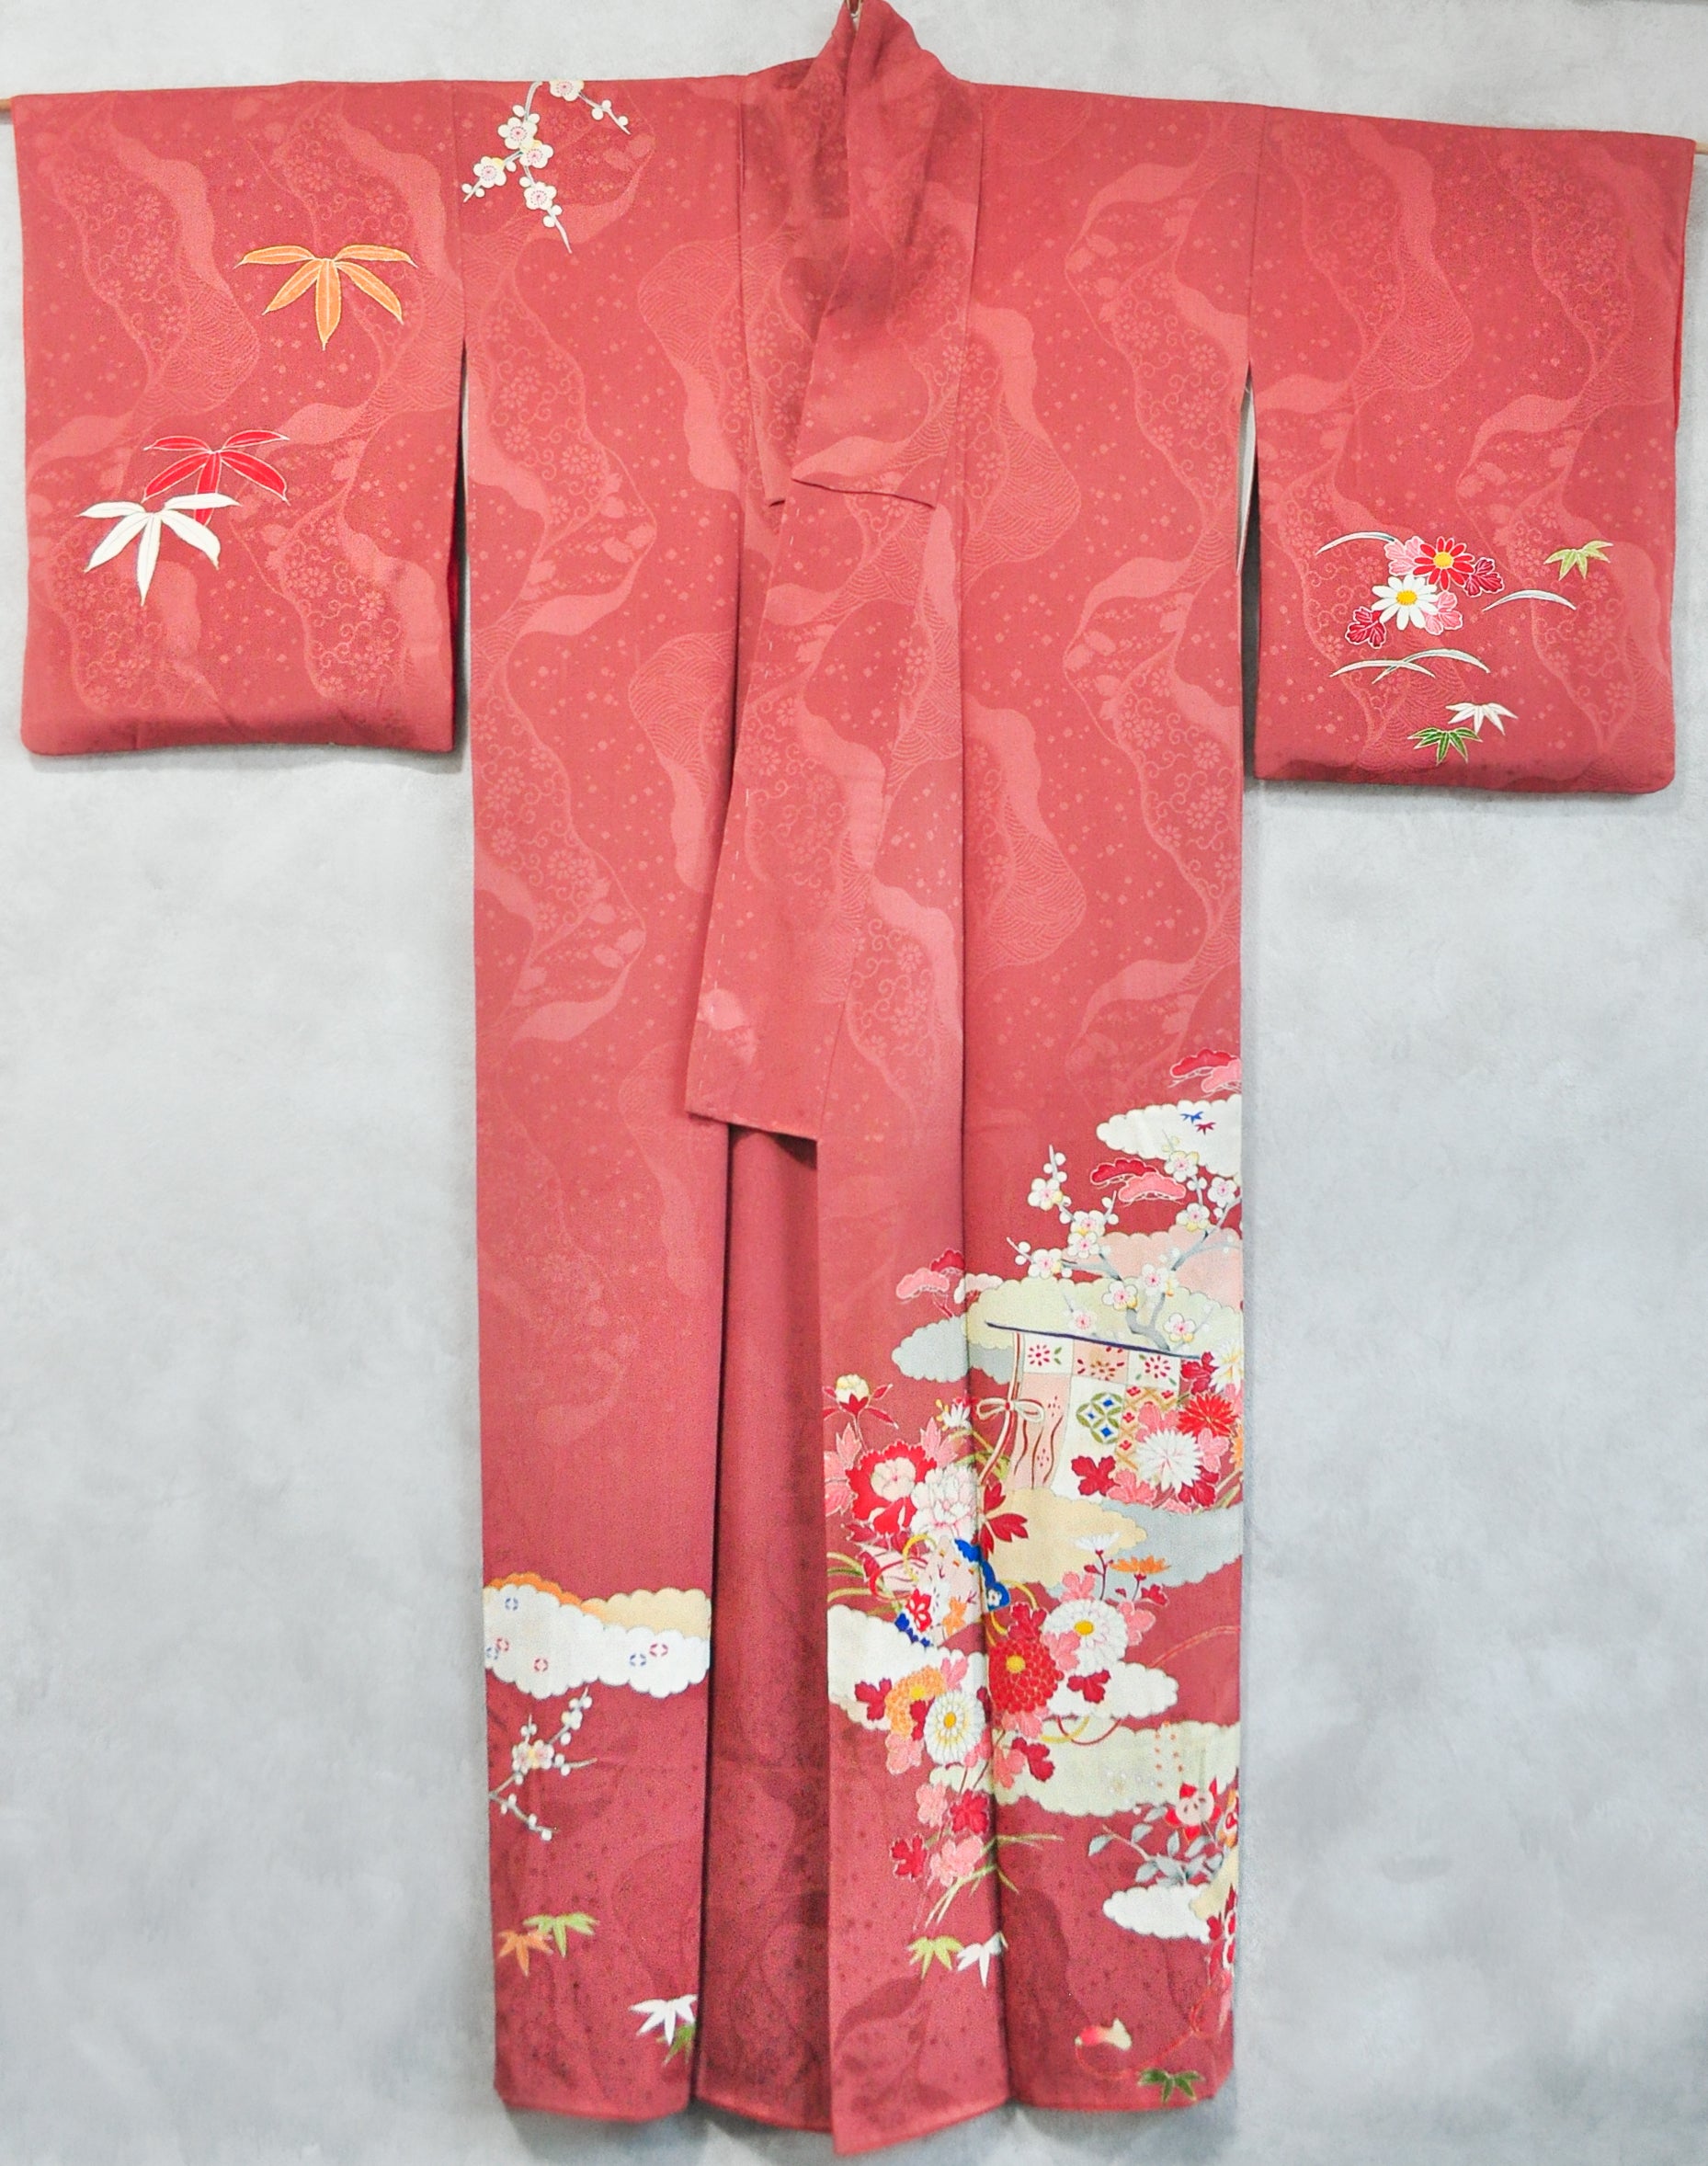 Kimono Robe - The Four Seasons, Sun, and Moon Kanji Characters on